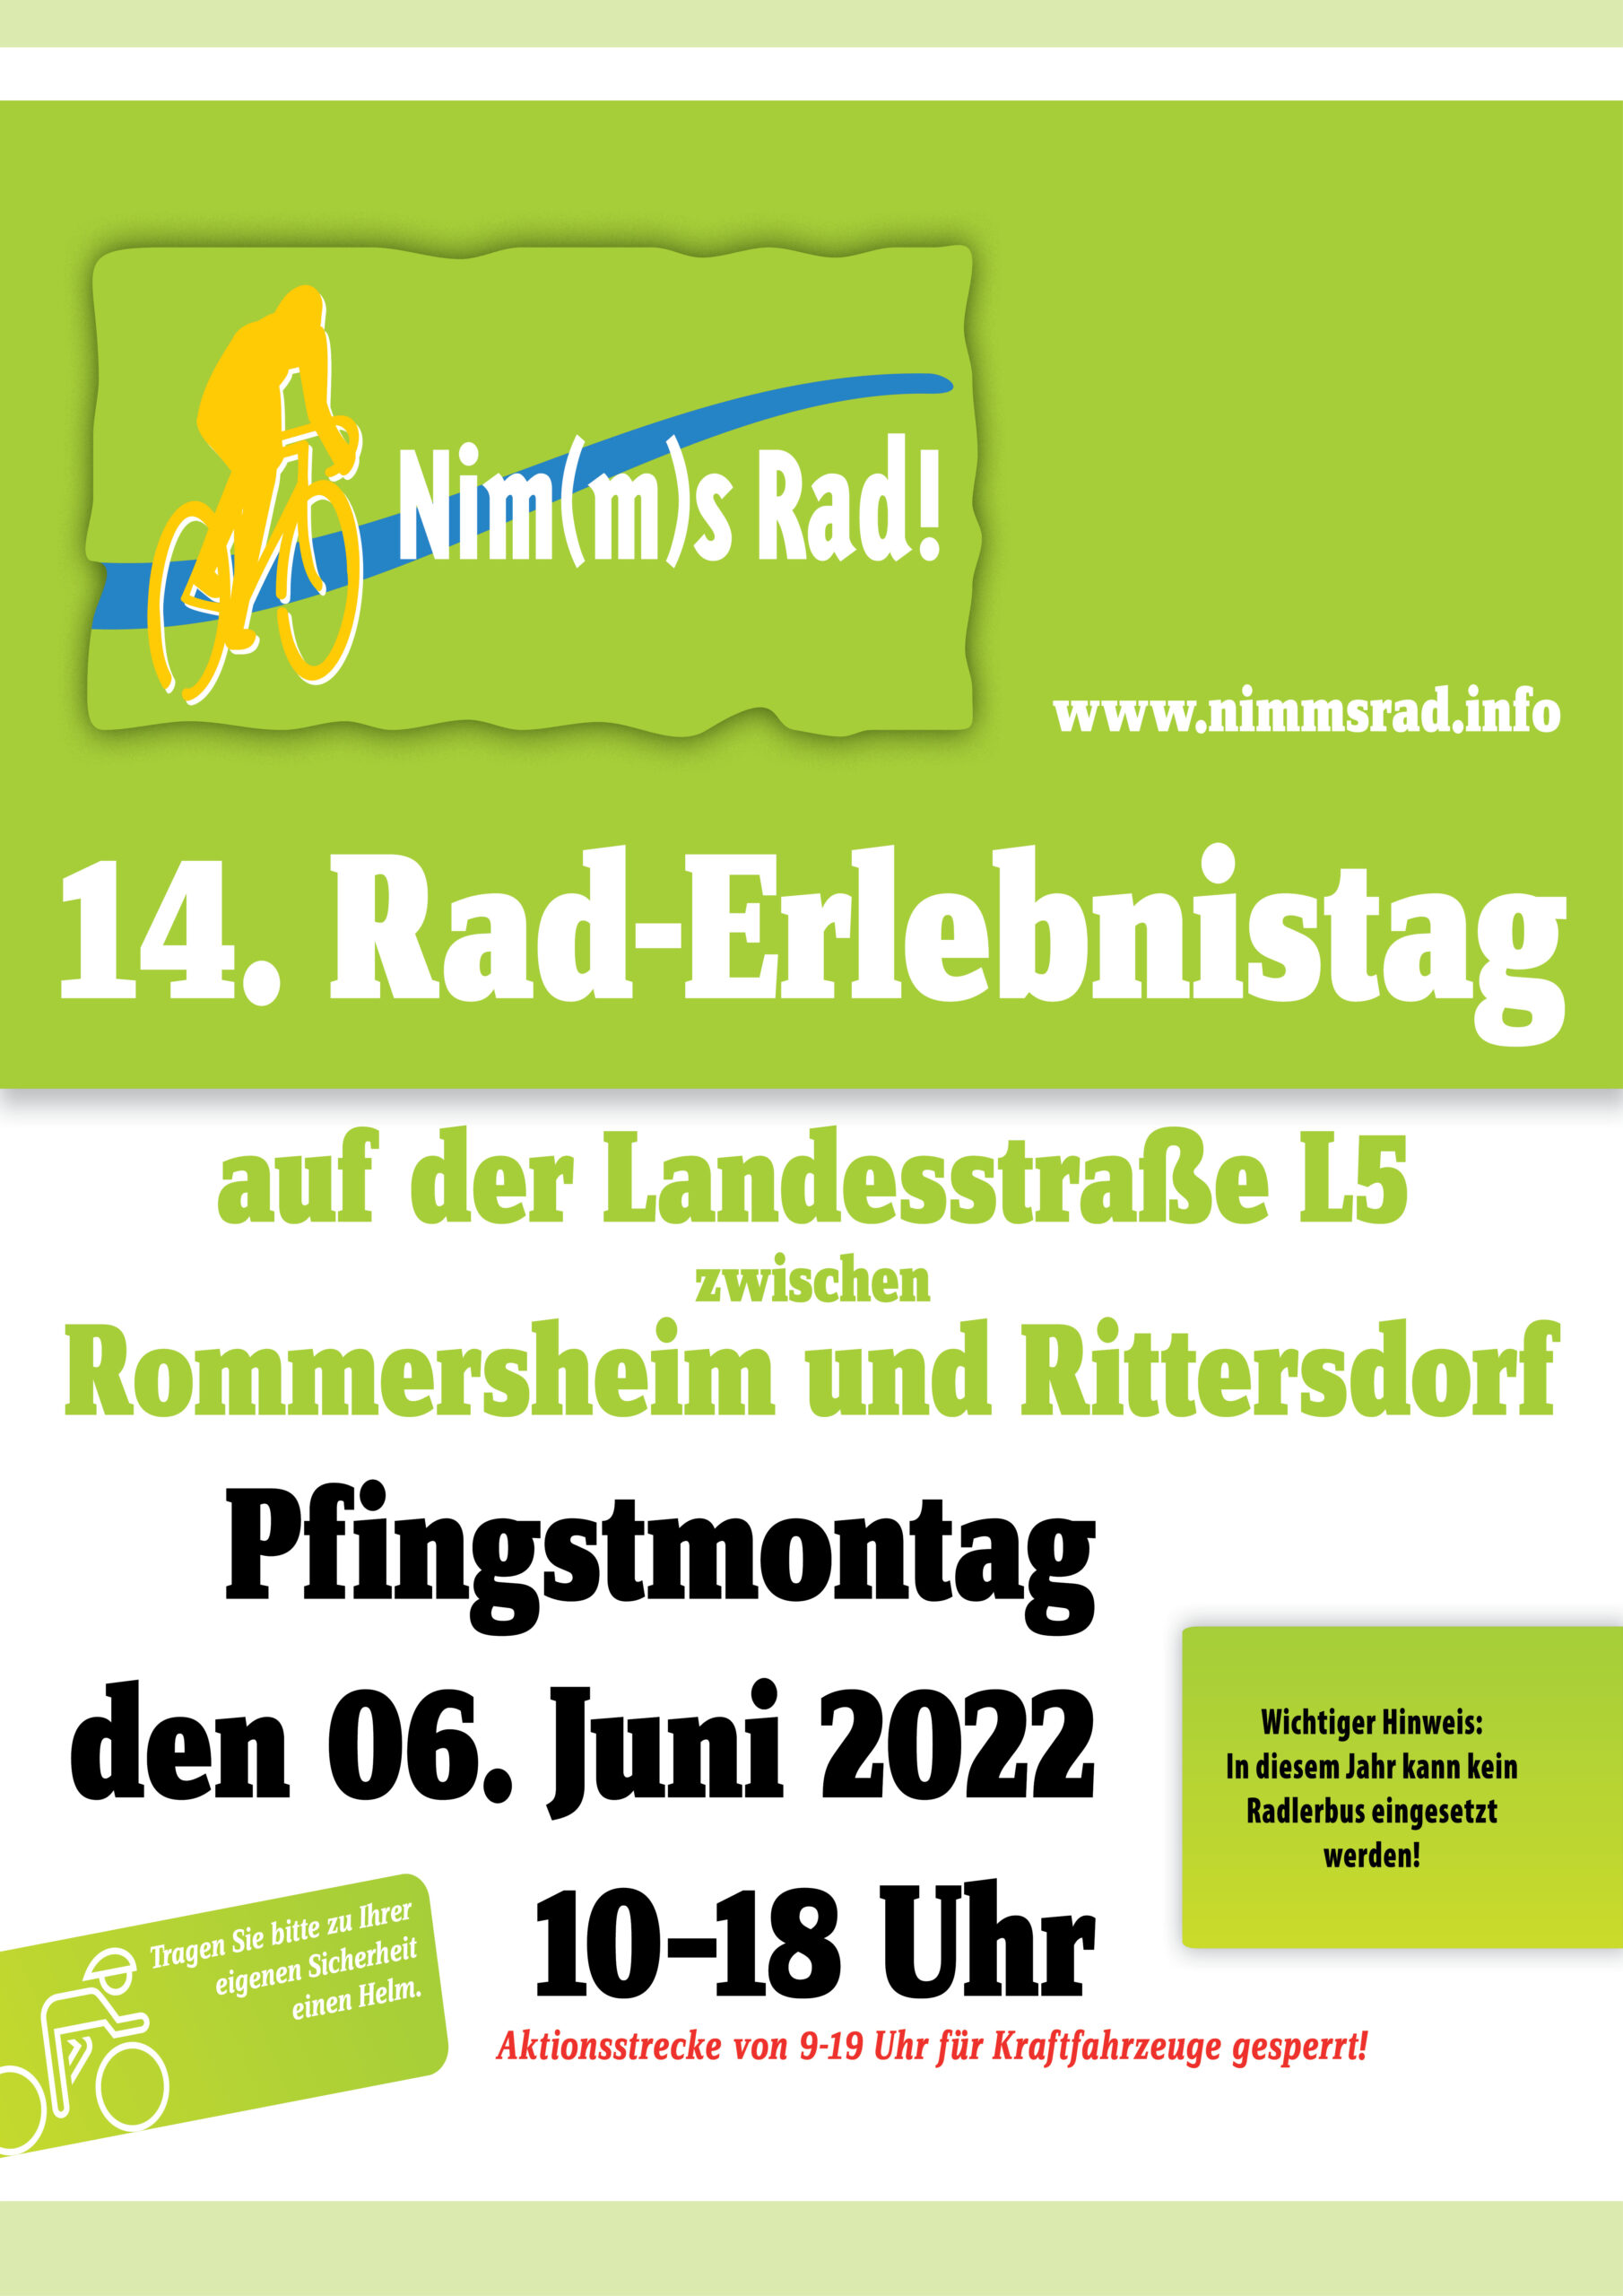 Nim(m)s Rad- Pfingstsonntag 6. Juni 2022